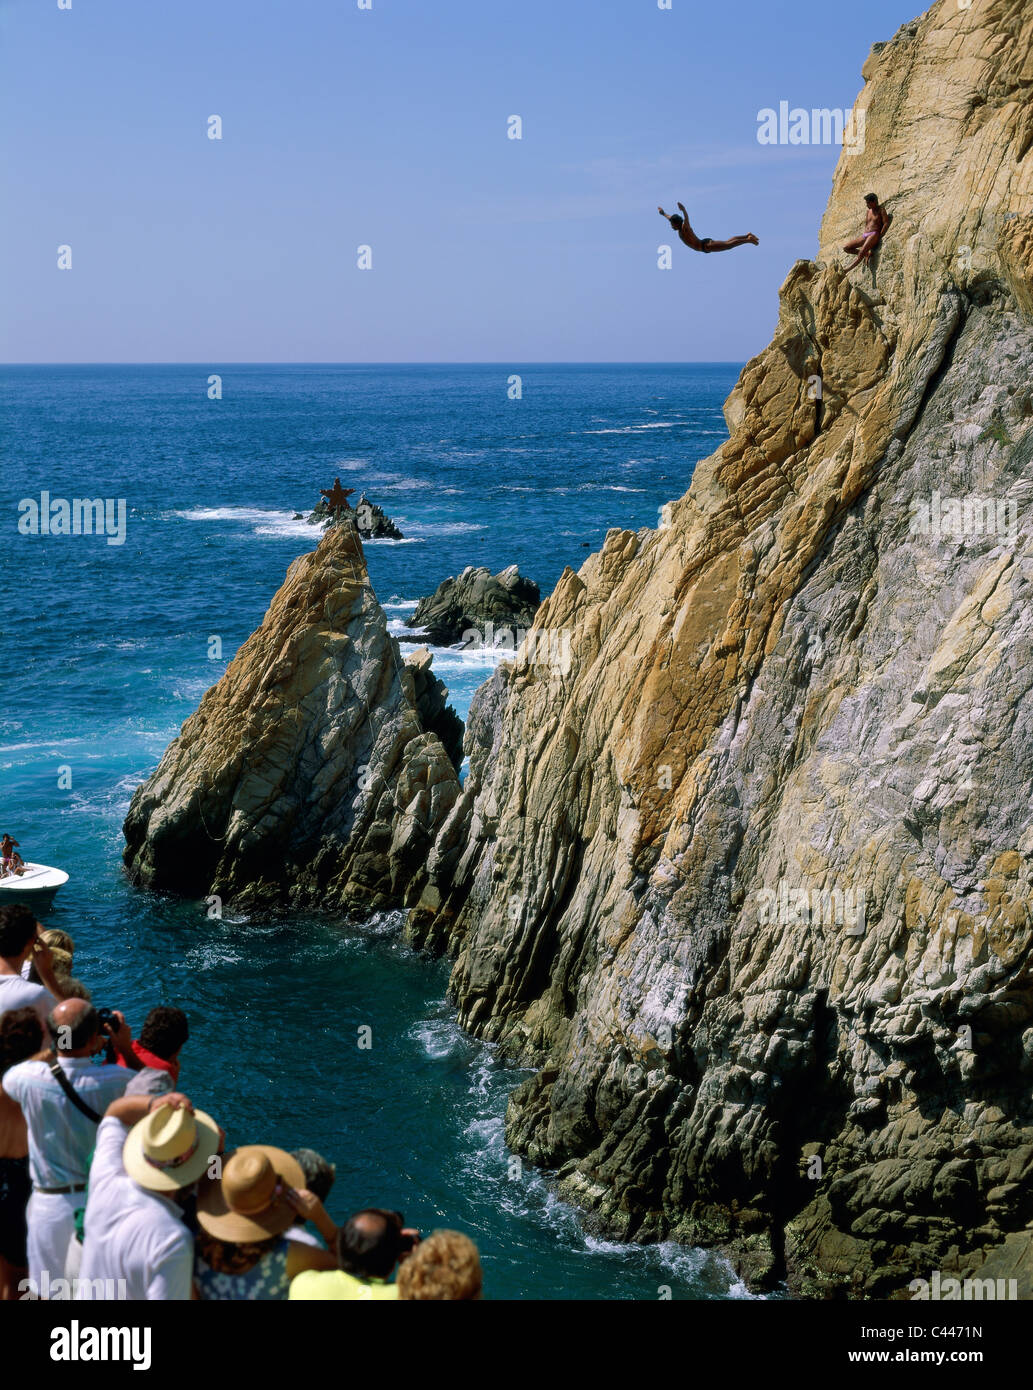 Acapulco, Cliff, Diver, Holiday, La quebrada, Landmark, Mexico, Tourism, Travel, Vacation, Stock Photo